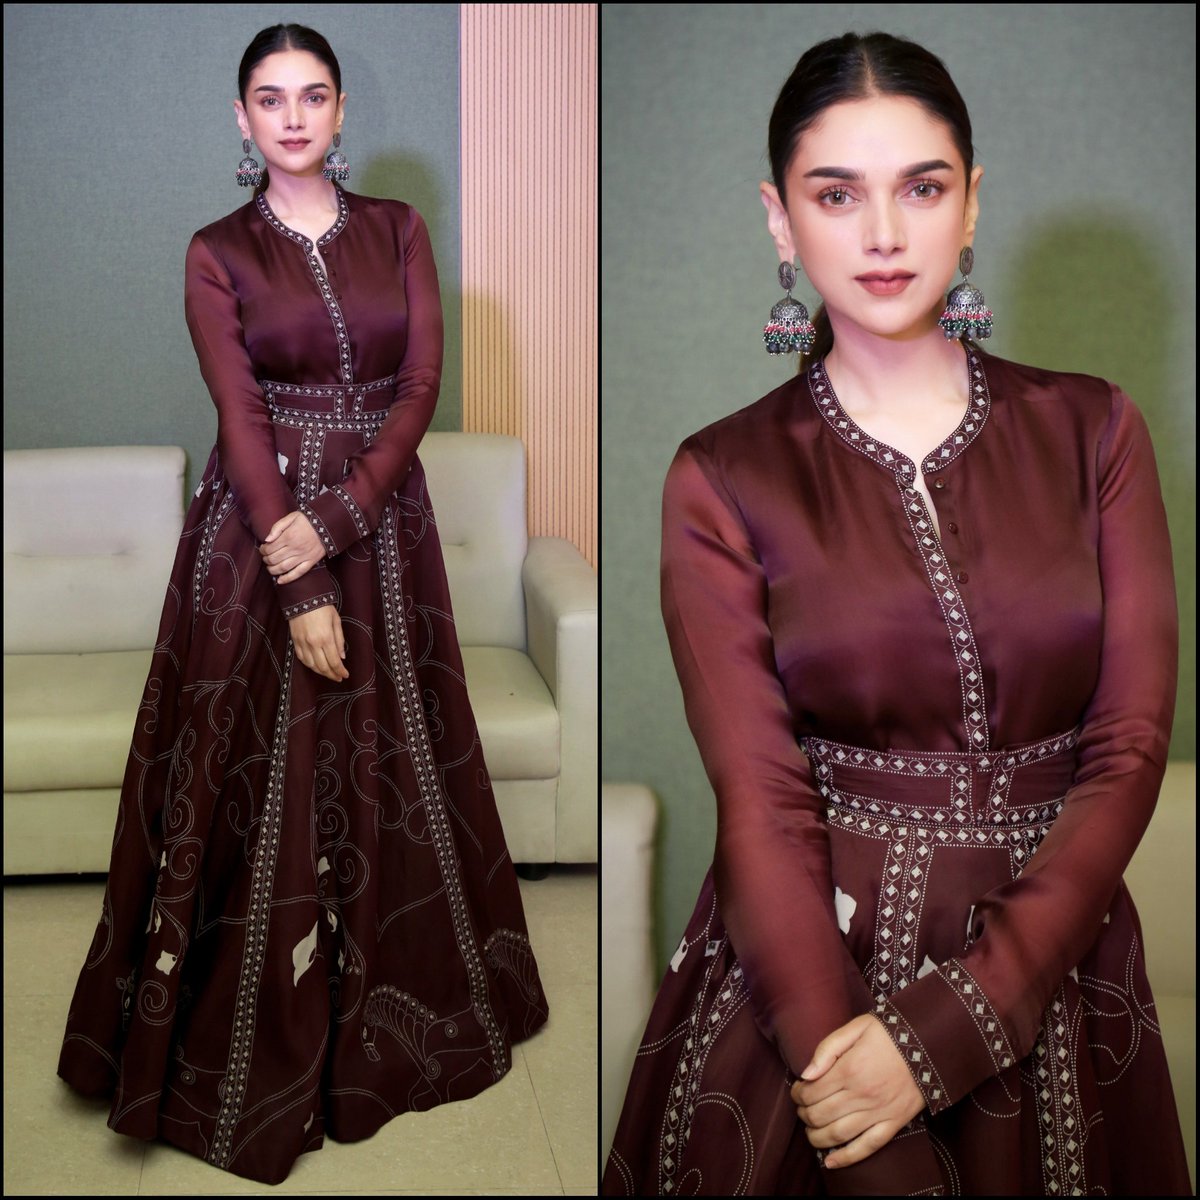 Aditi Rao Hydari in a Burgundy Maxi Dress from AM:PM Collection 